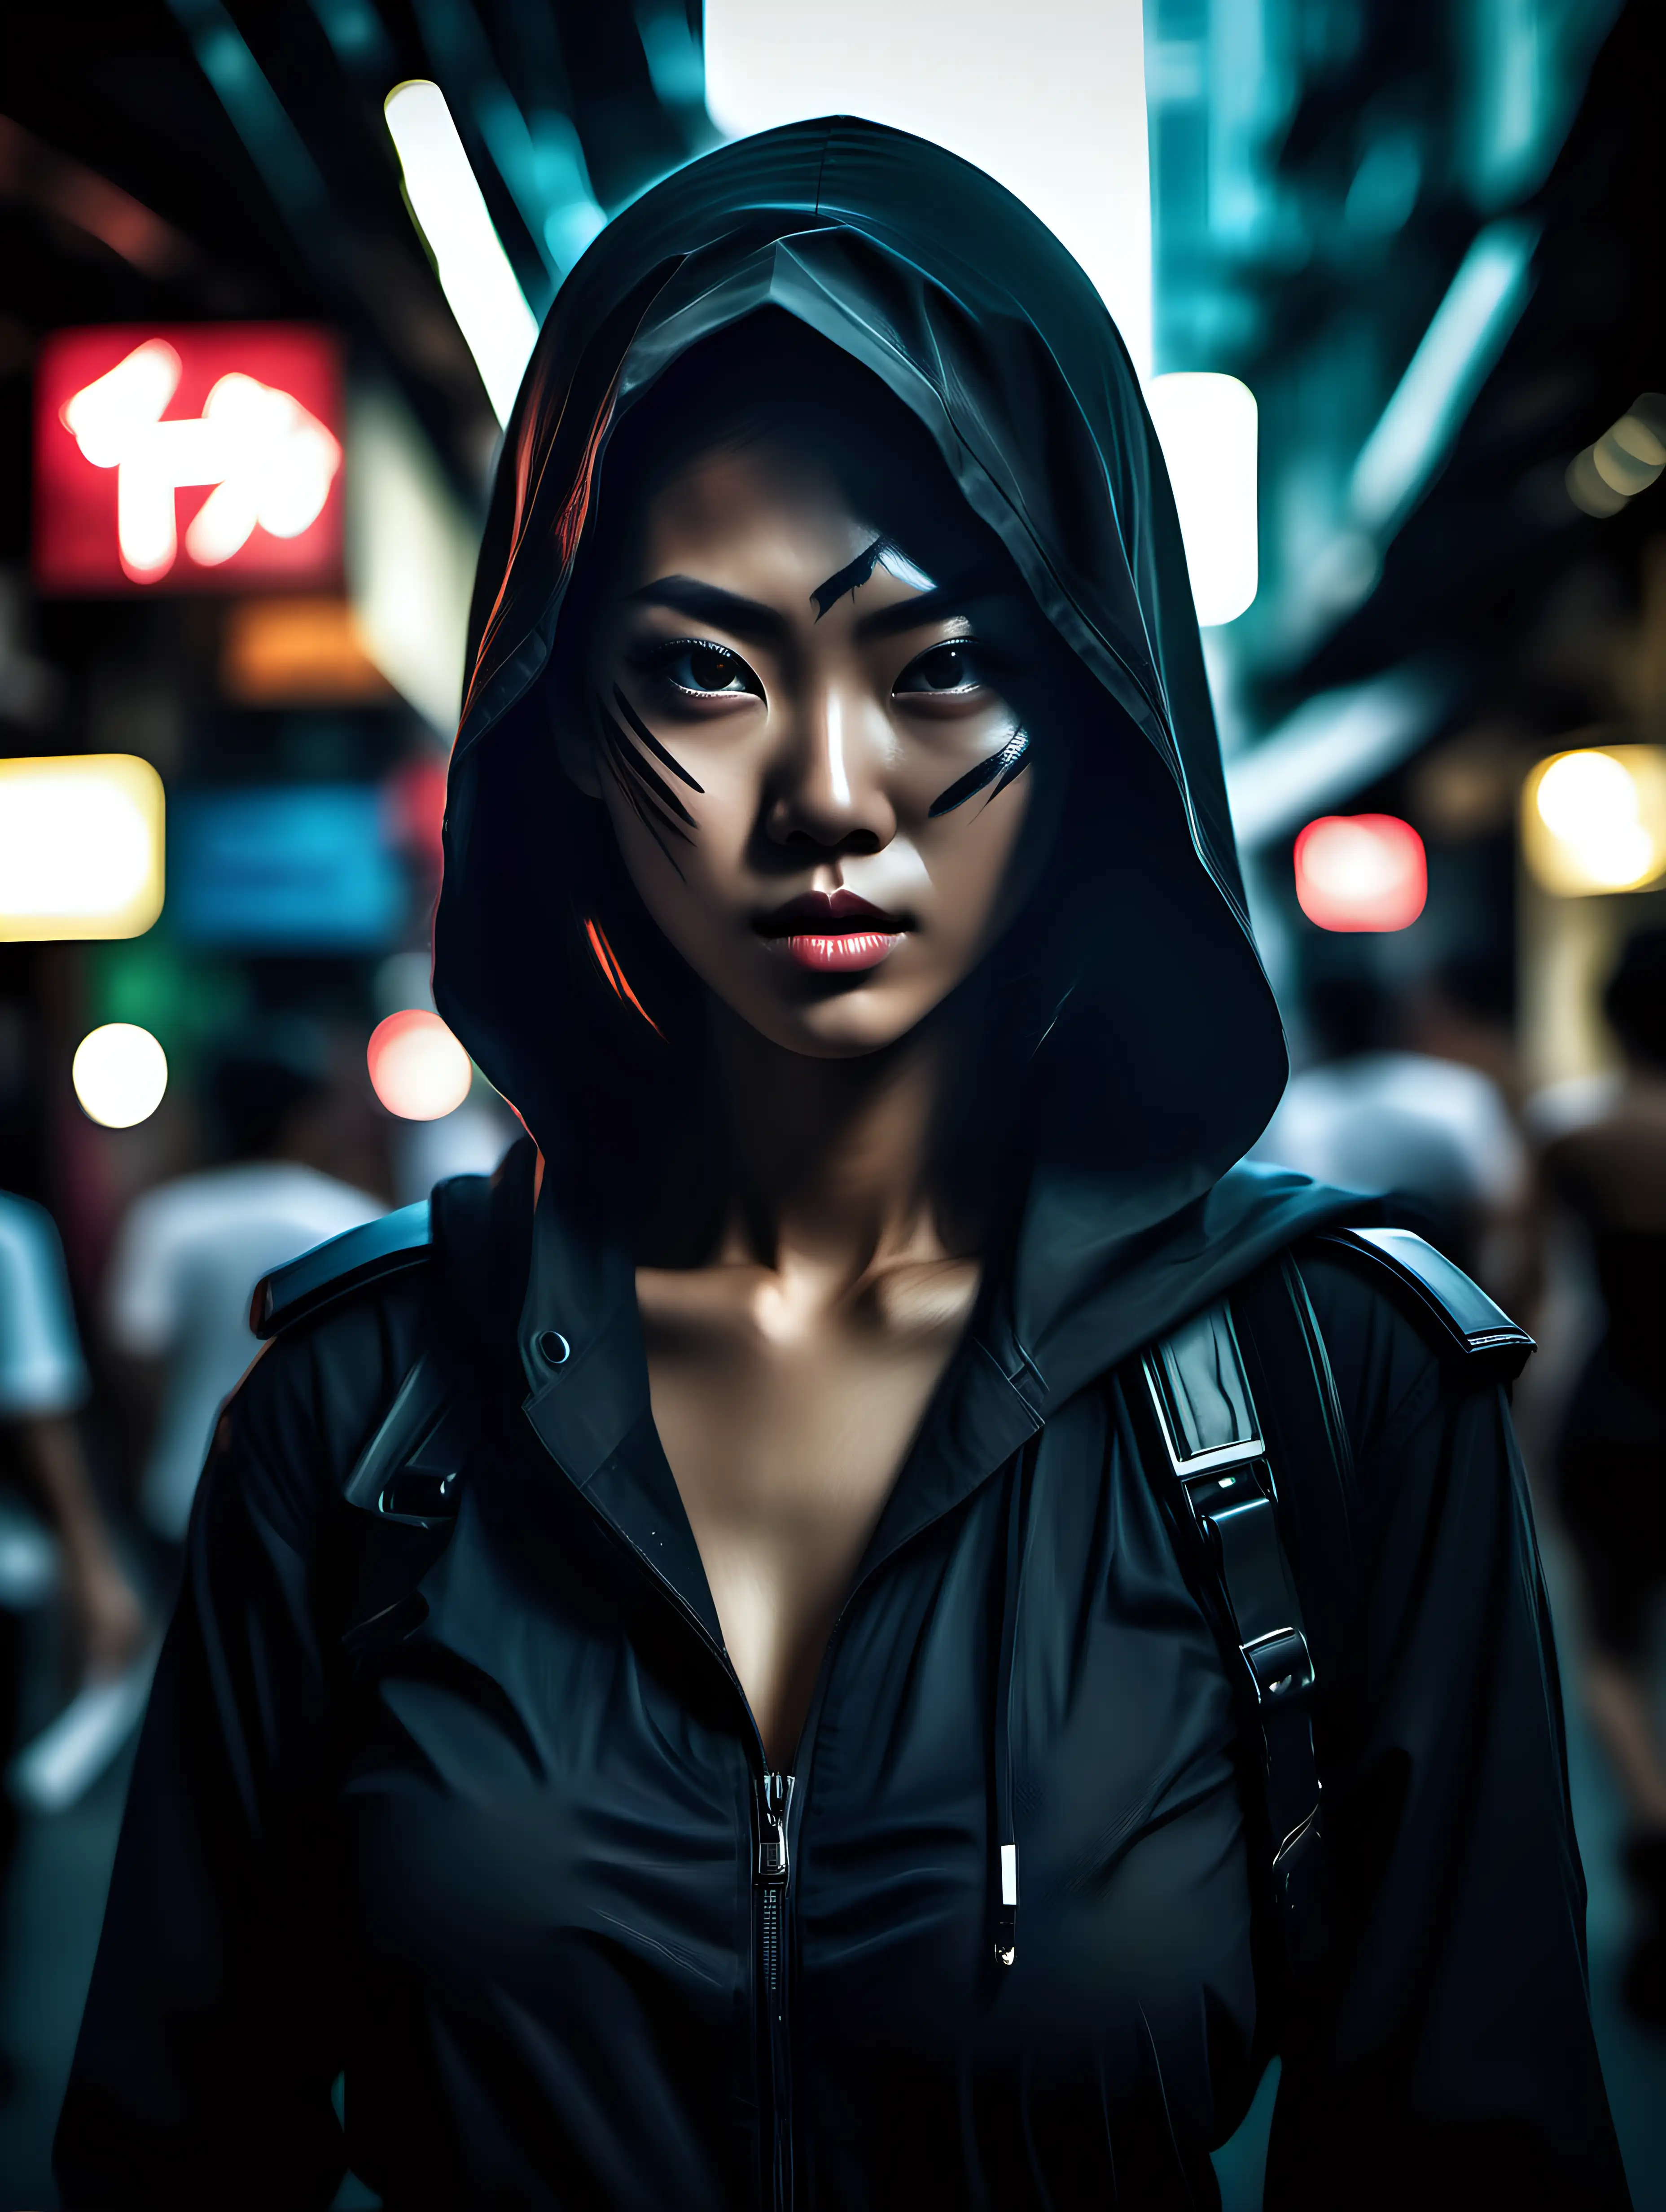 Urban Chic Assassin in Cinematic Bangkok Nightlife